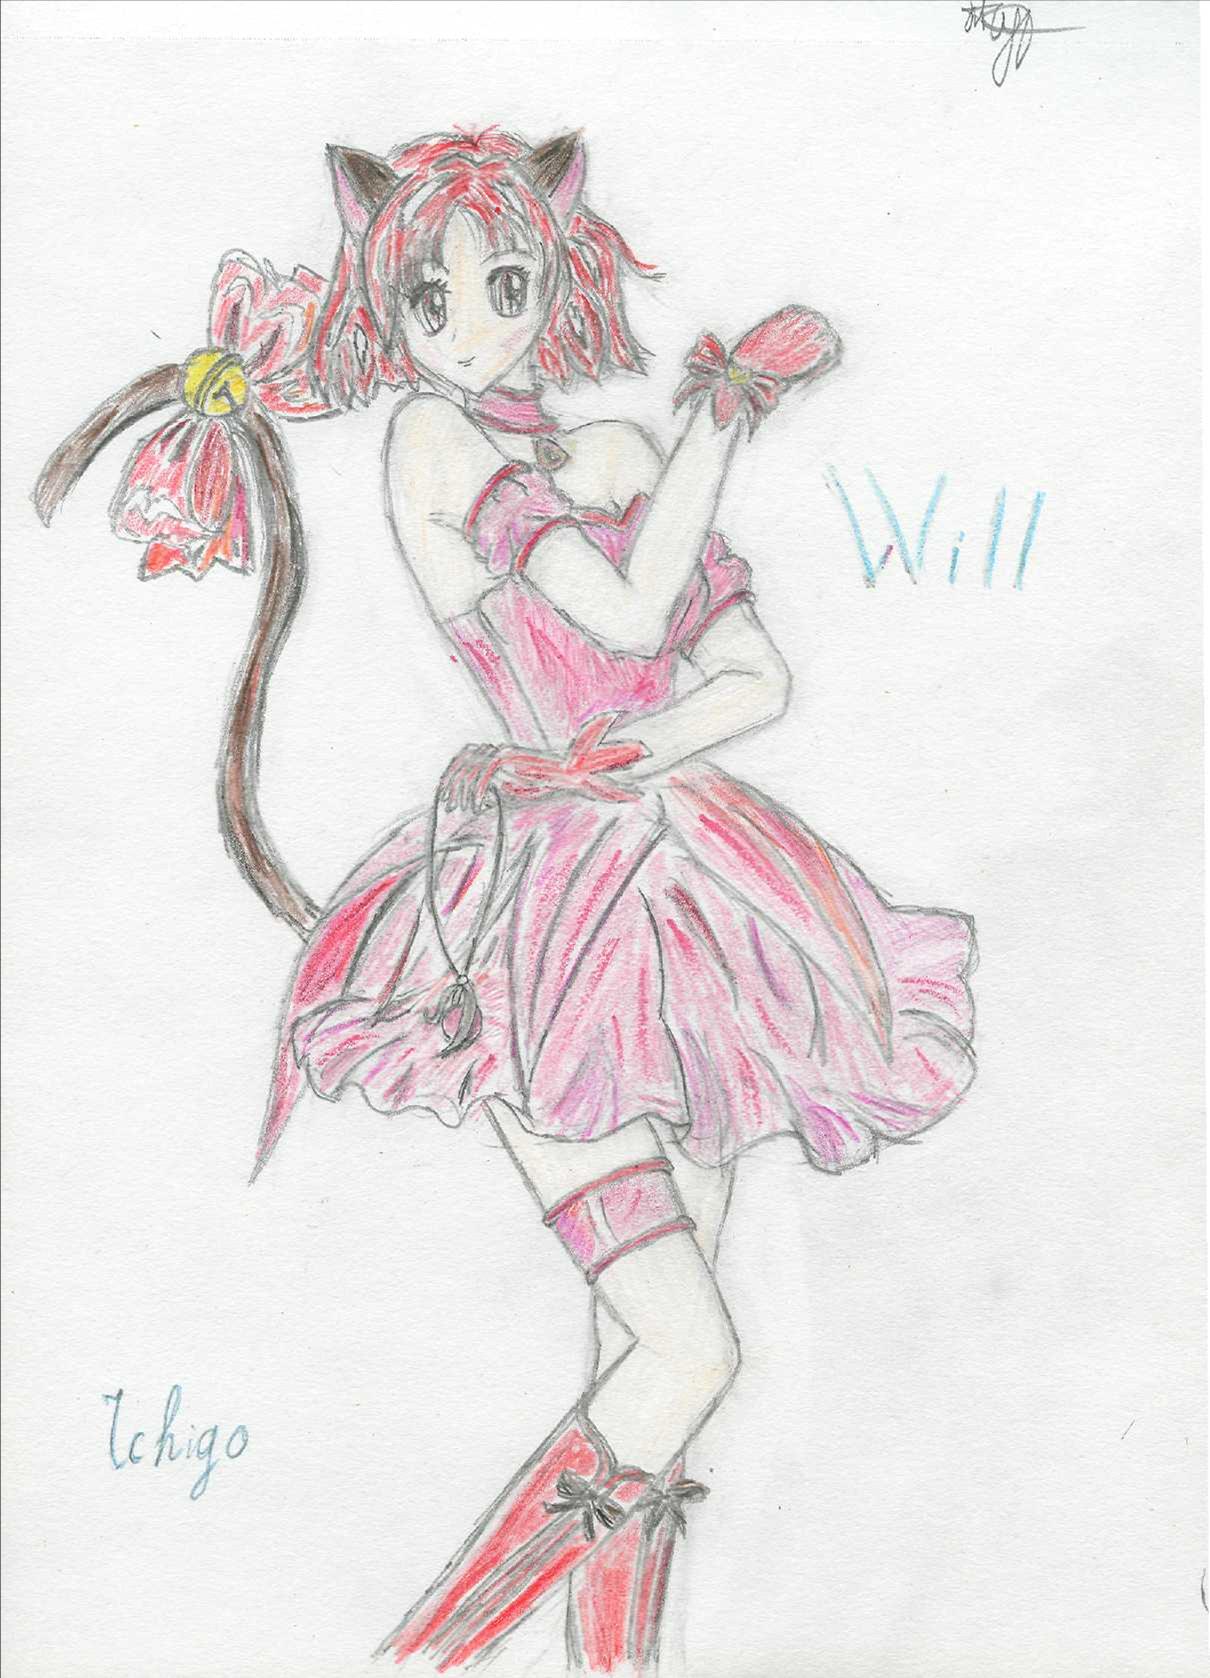 WITCH MewMew Style: Will - Ichigo by FleurDeLaLune